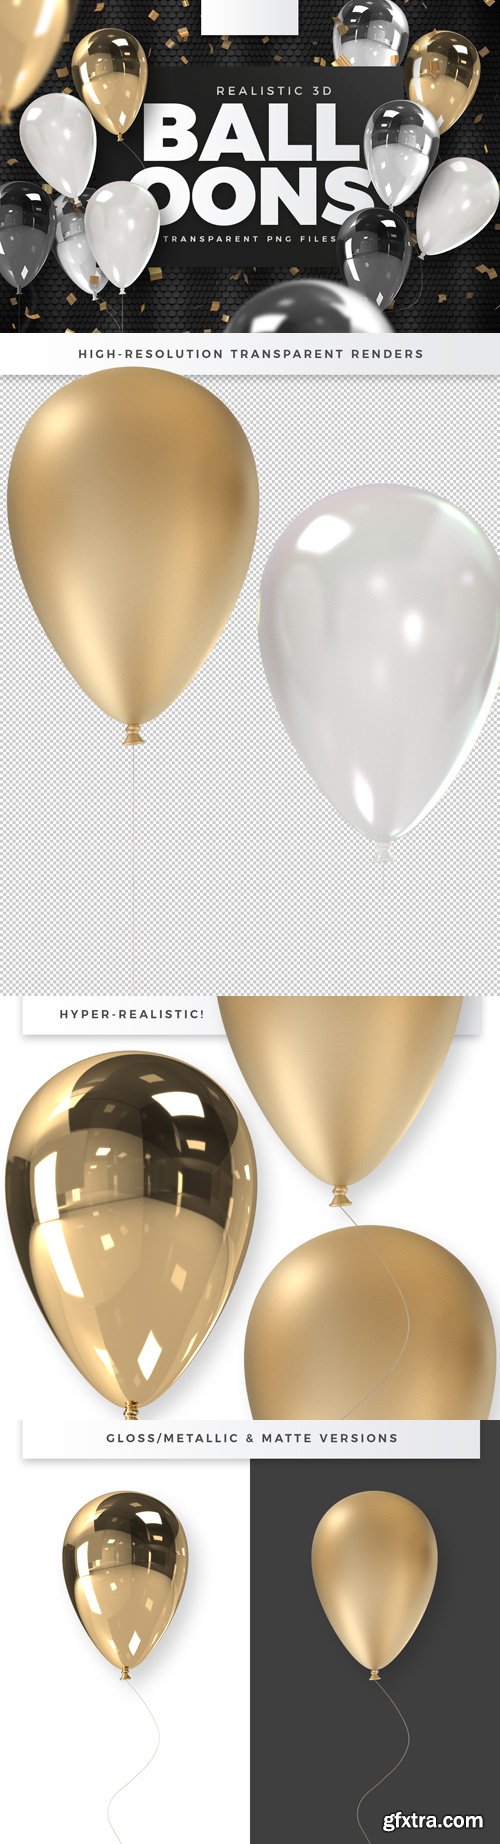 Realistic 3D Balloons - 3D Renders